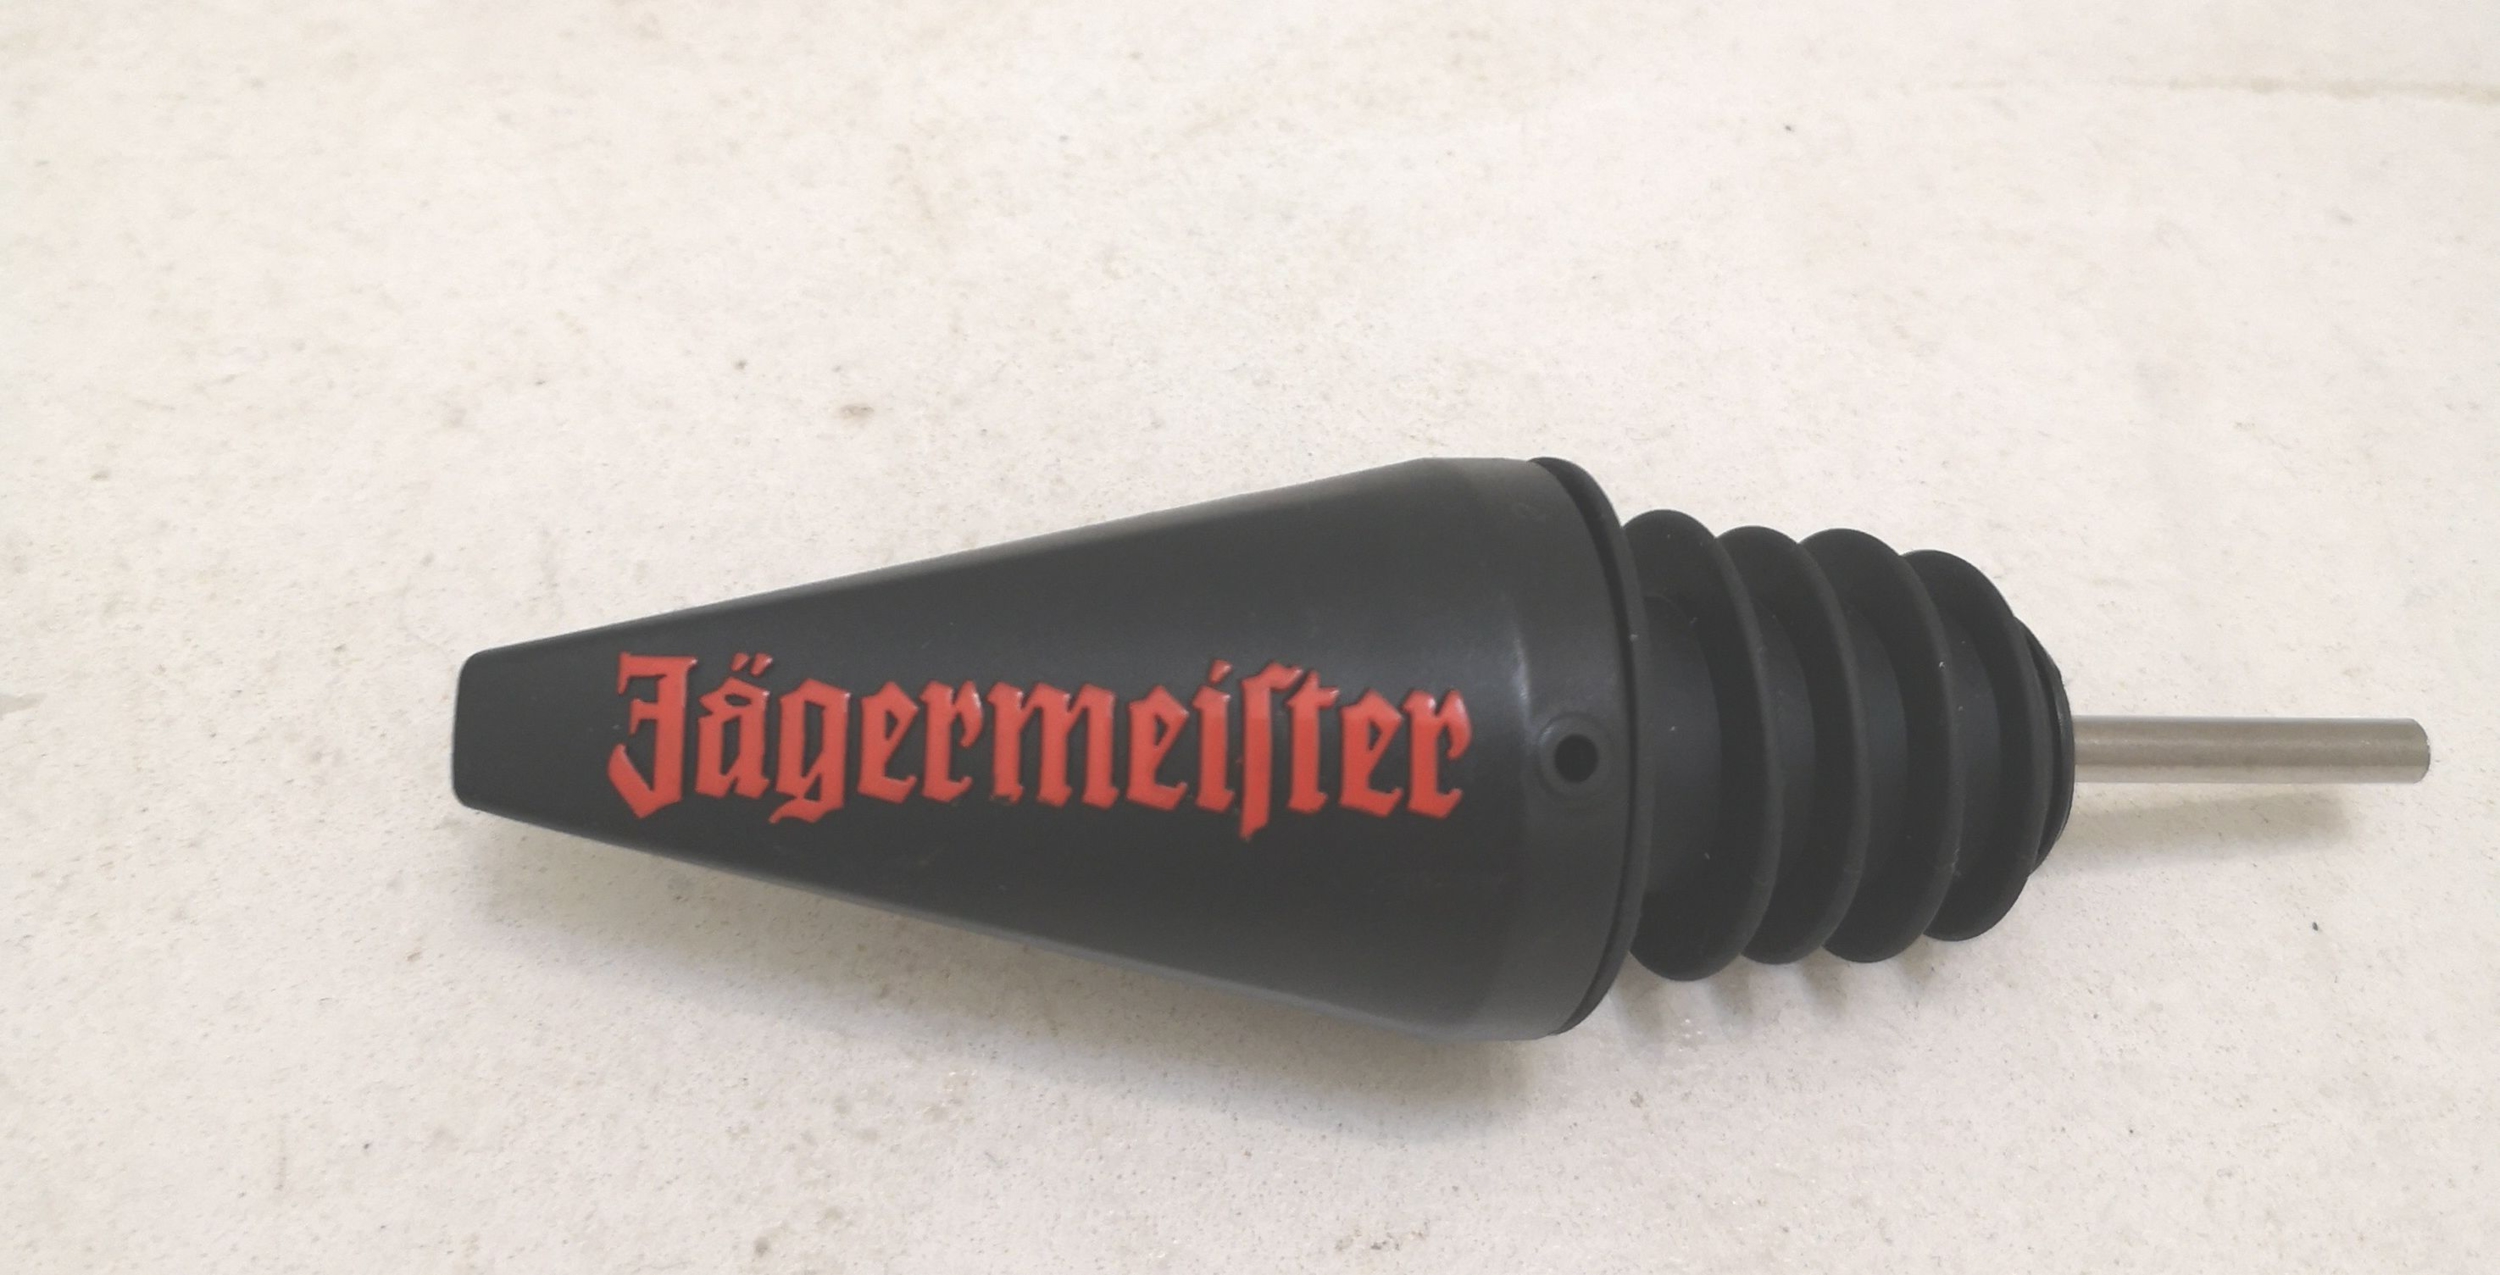 Bec verseur Jägermeister